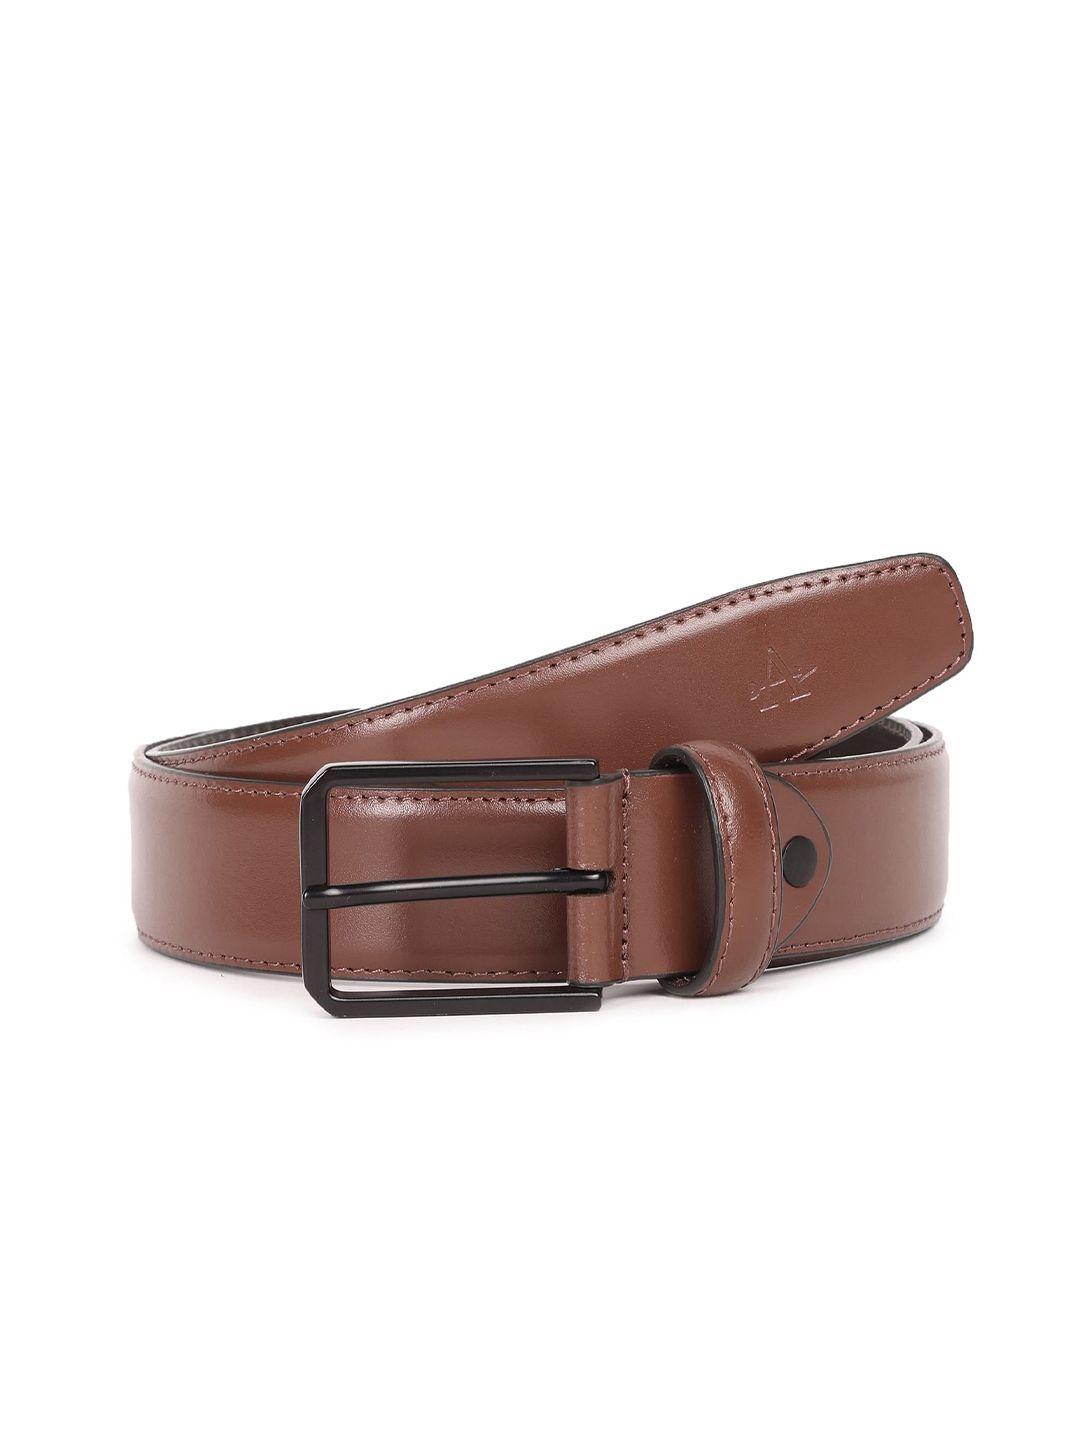 arrow men brown leather formal belt